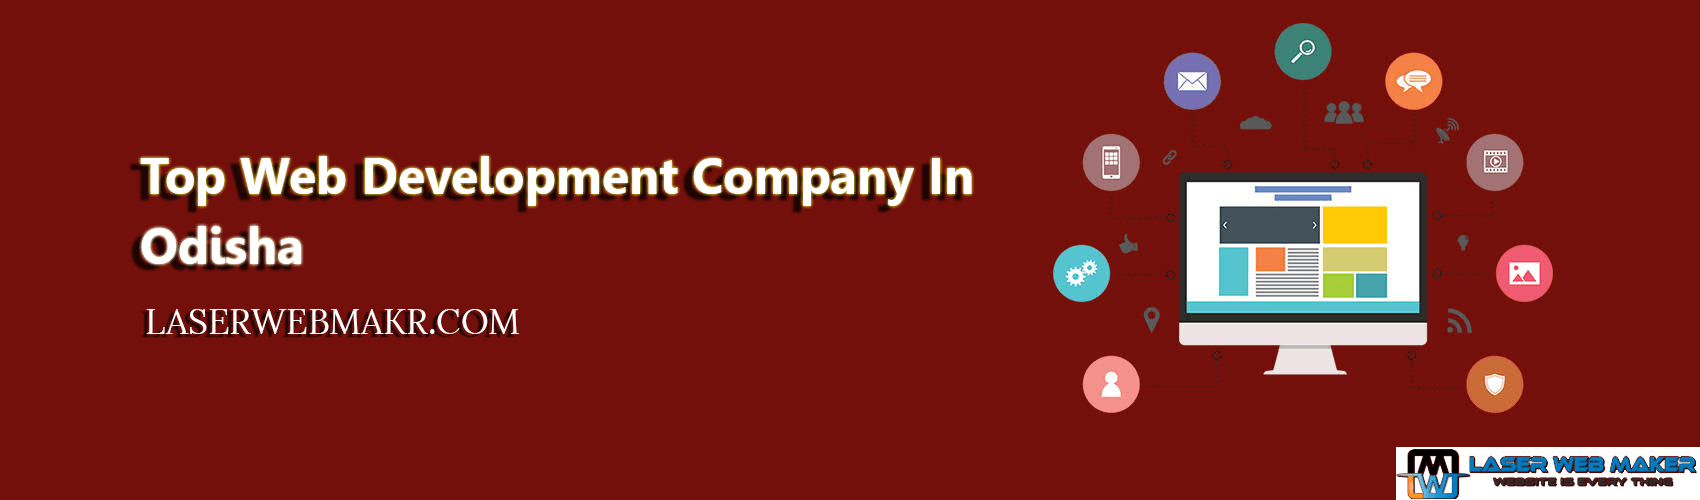 Top Web Development Company In Odisha